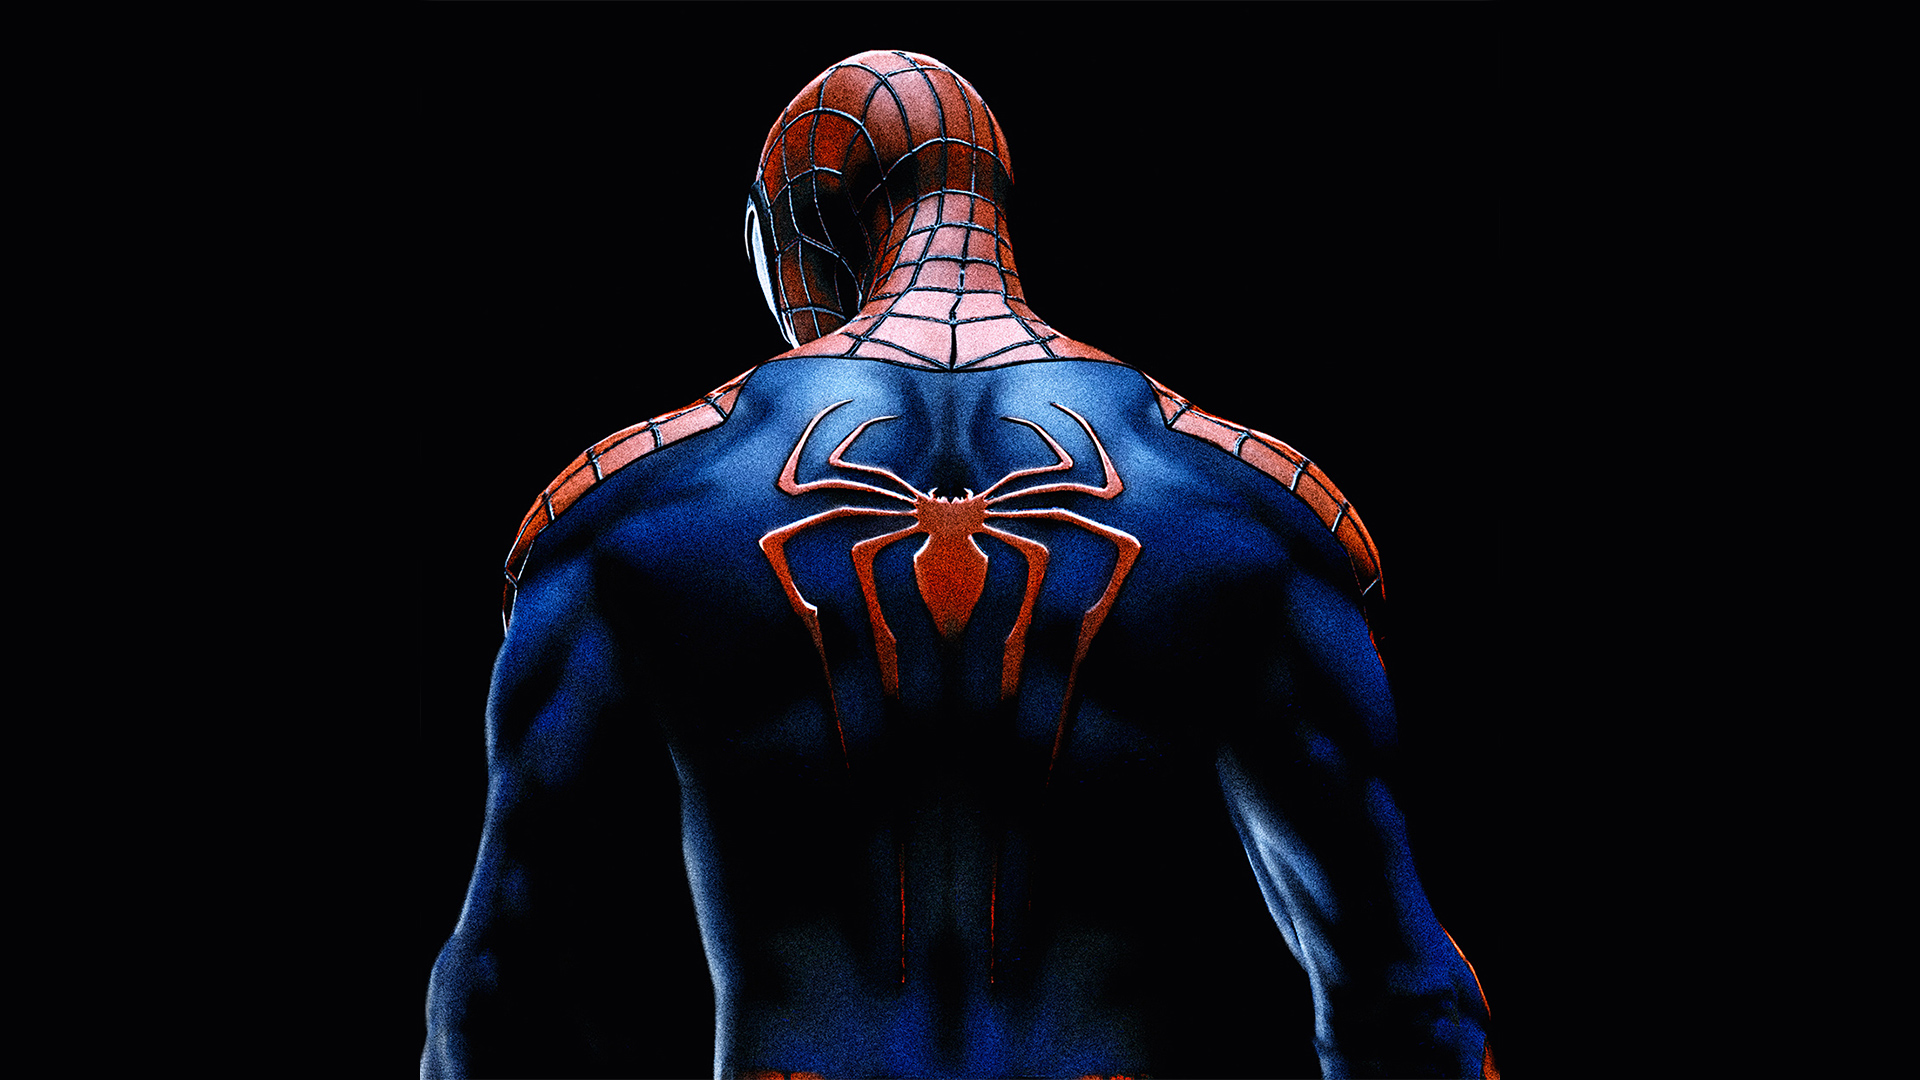  Spiderman  Back Spider Logo  HD  Superheroes 4k Wallpapers  